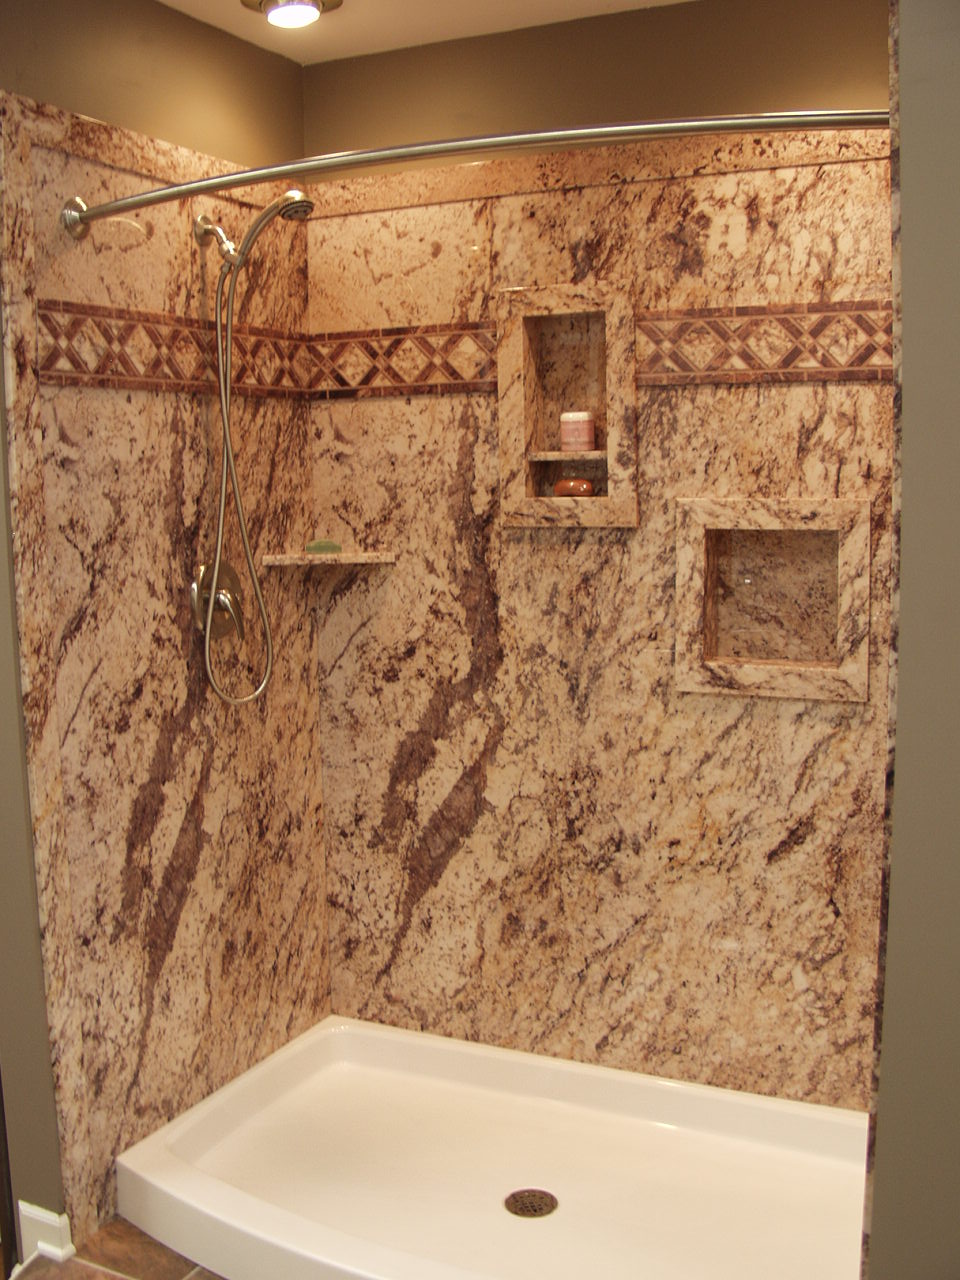 shower tub kits diy panels walls tile granite stone marble panel faux acrylic decorative building piece looking pvc base tiled